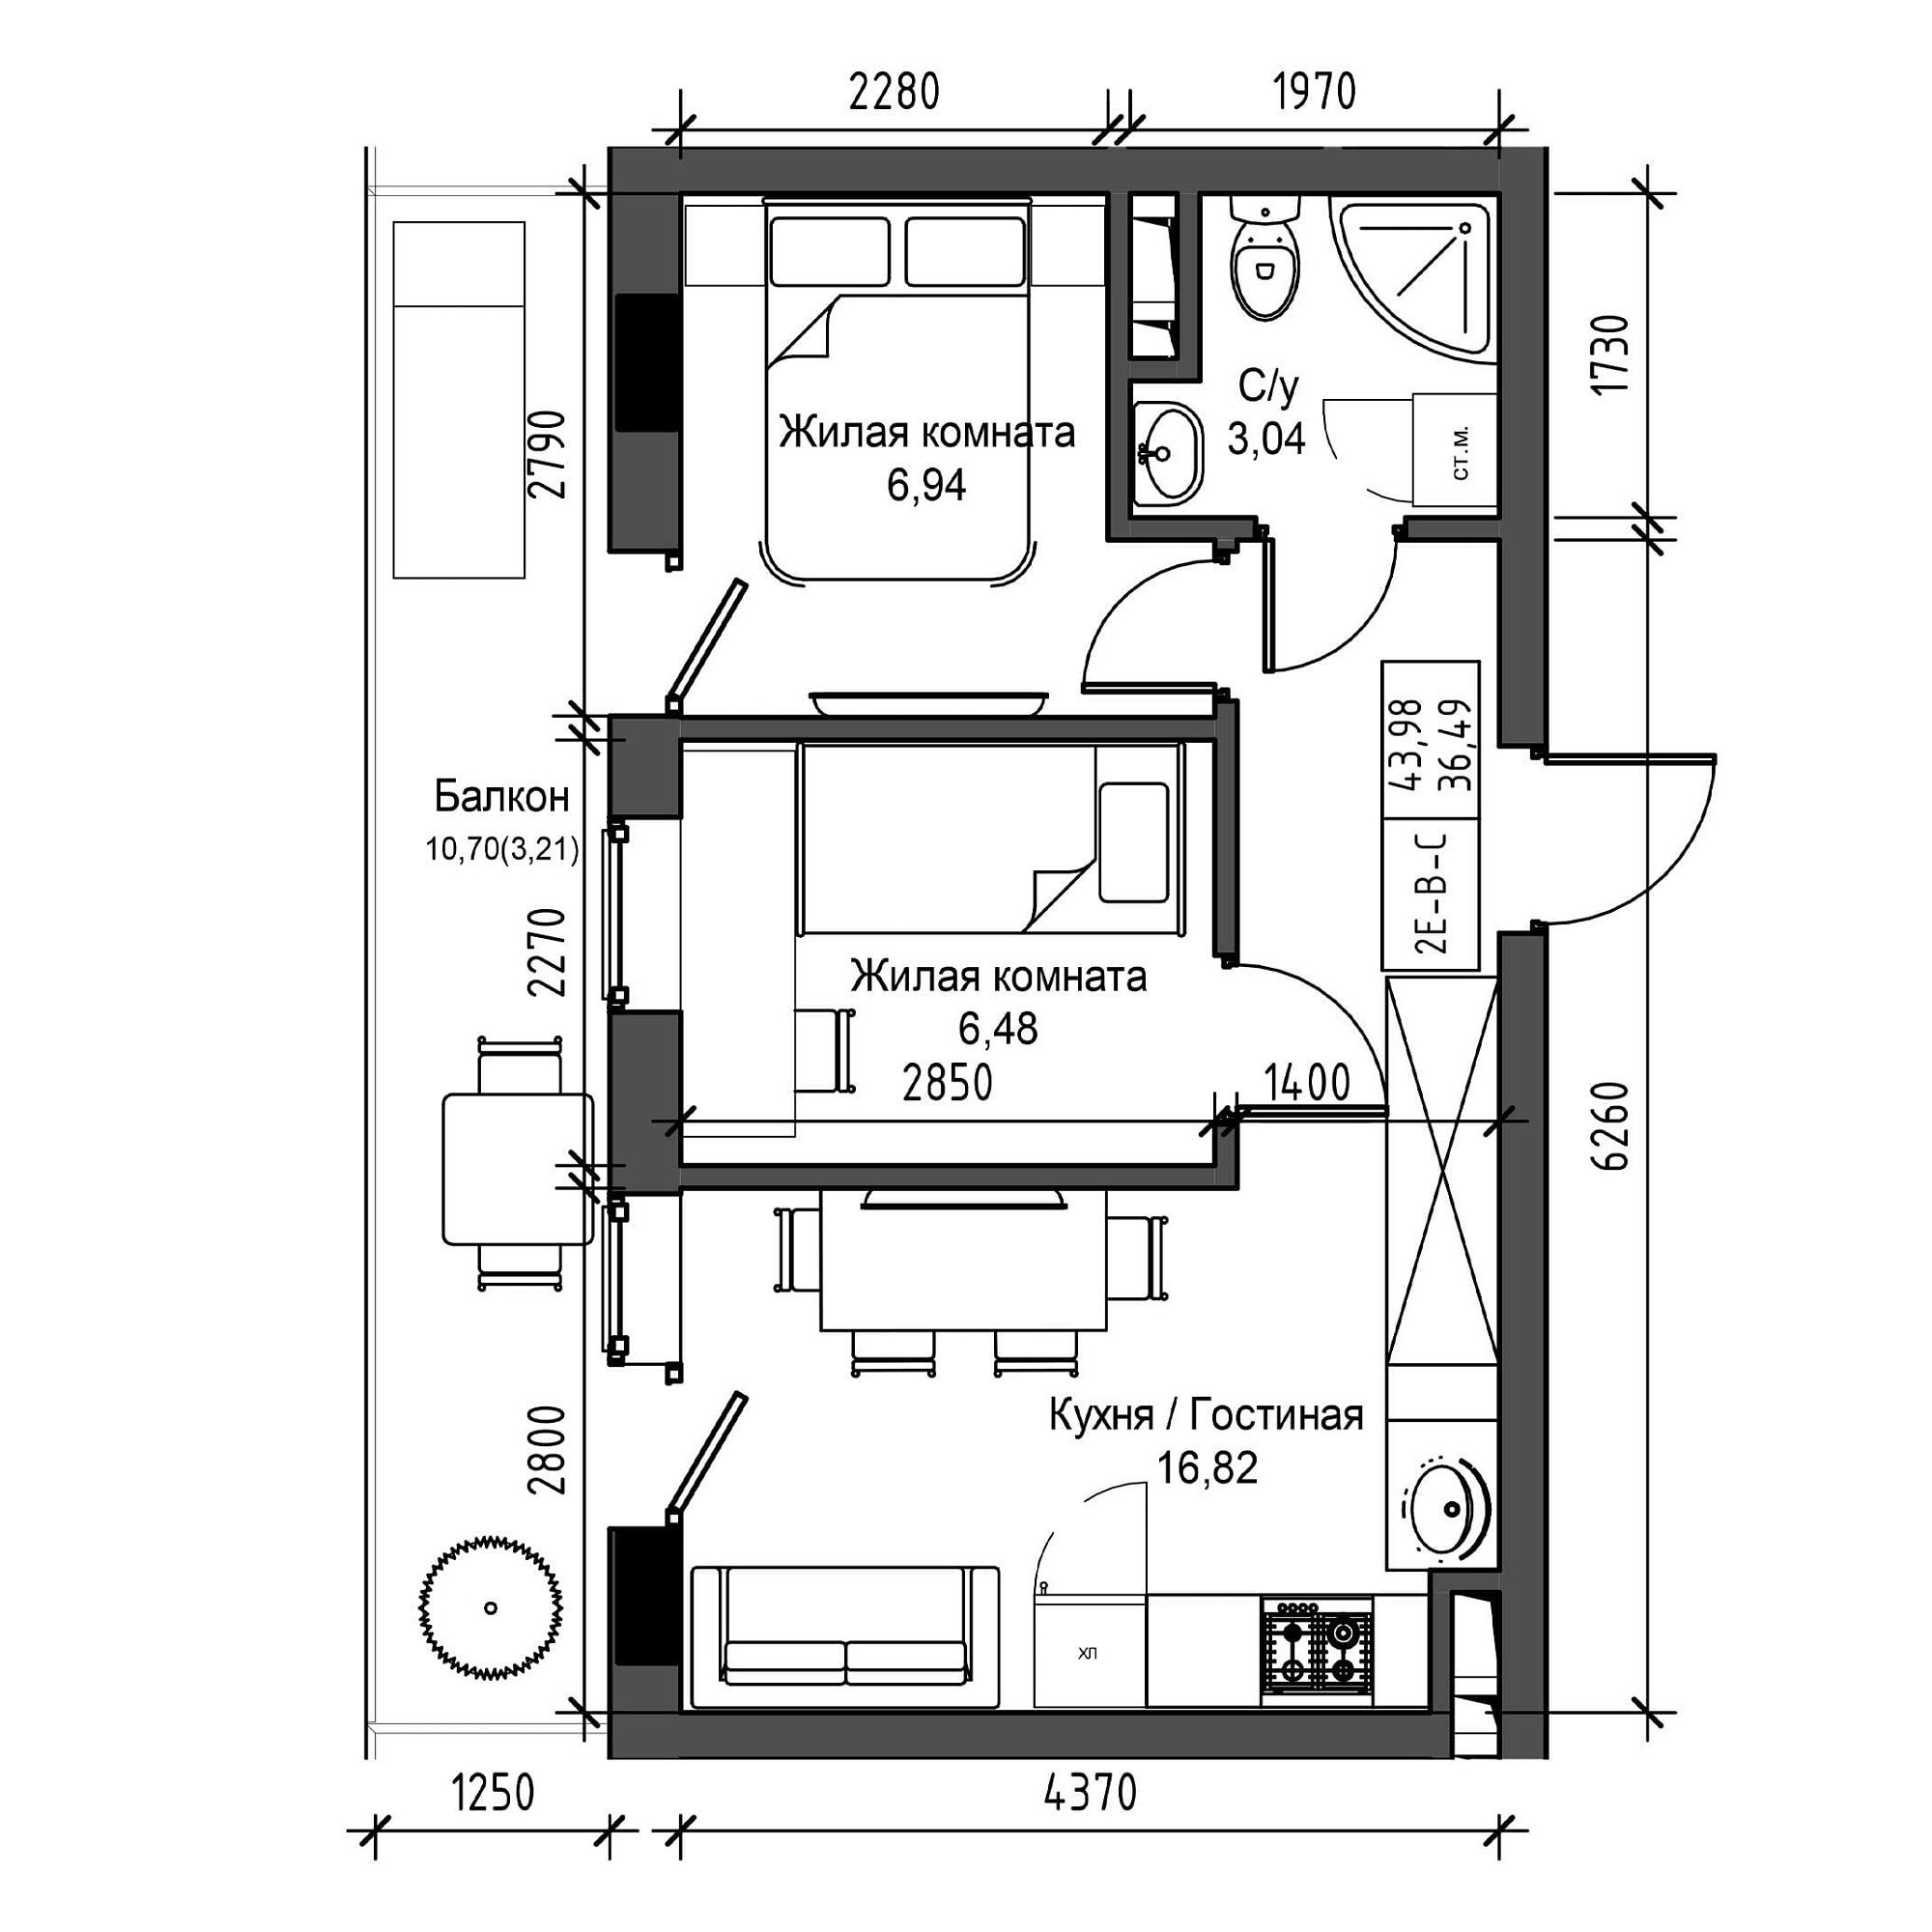 Планування 2-к квартира площею 36.49м2, UM-001-04/0017.